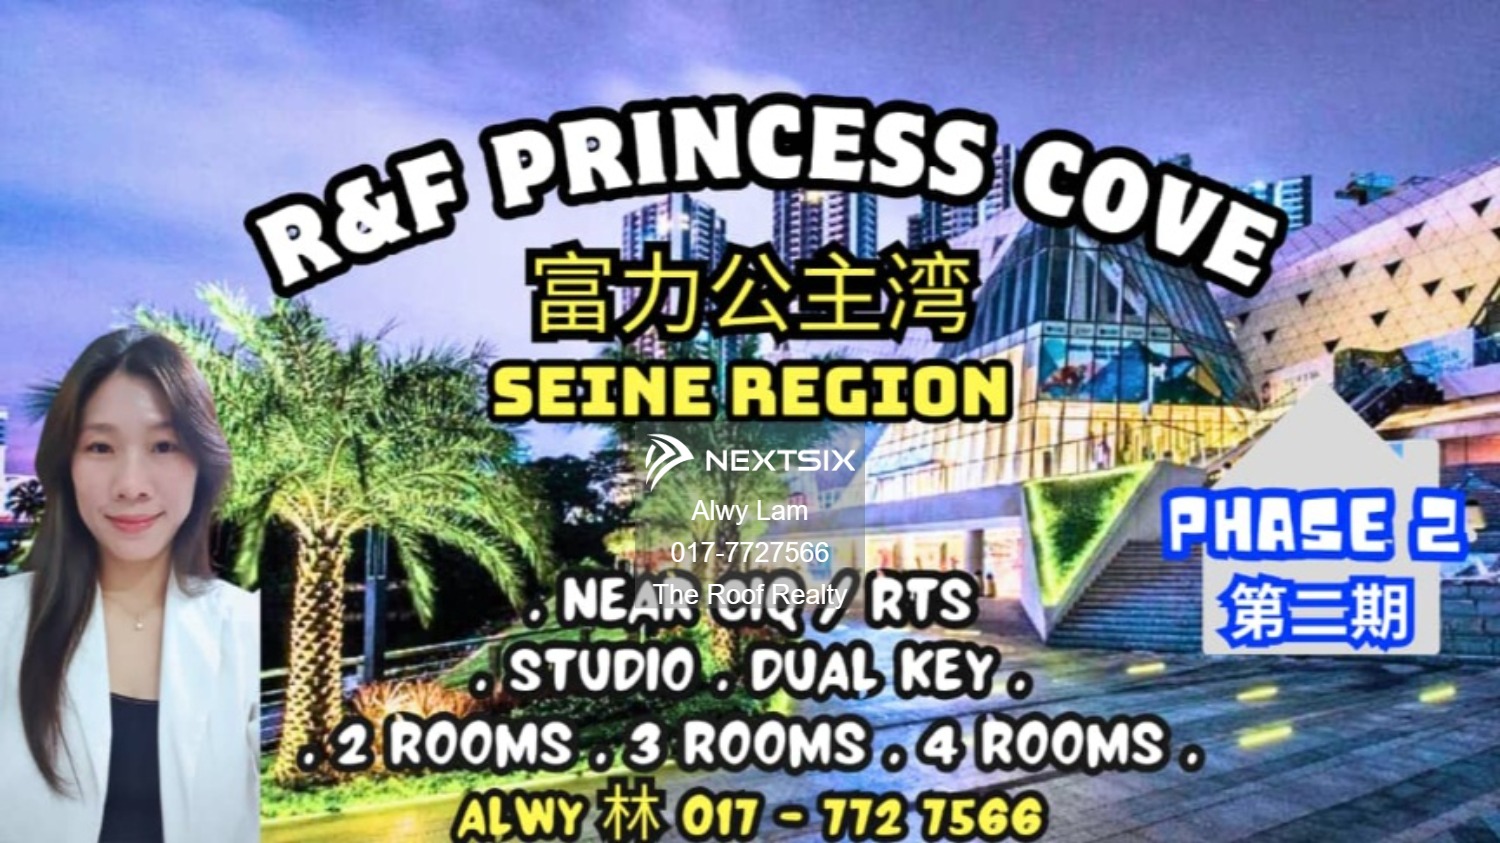 R&F Princess Cove Phase 2